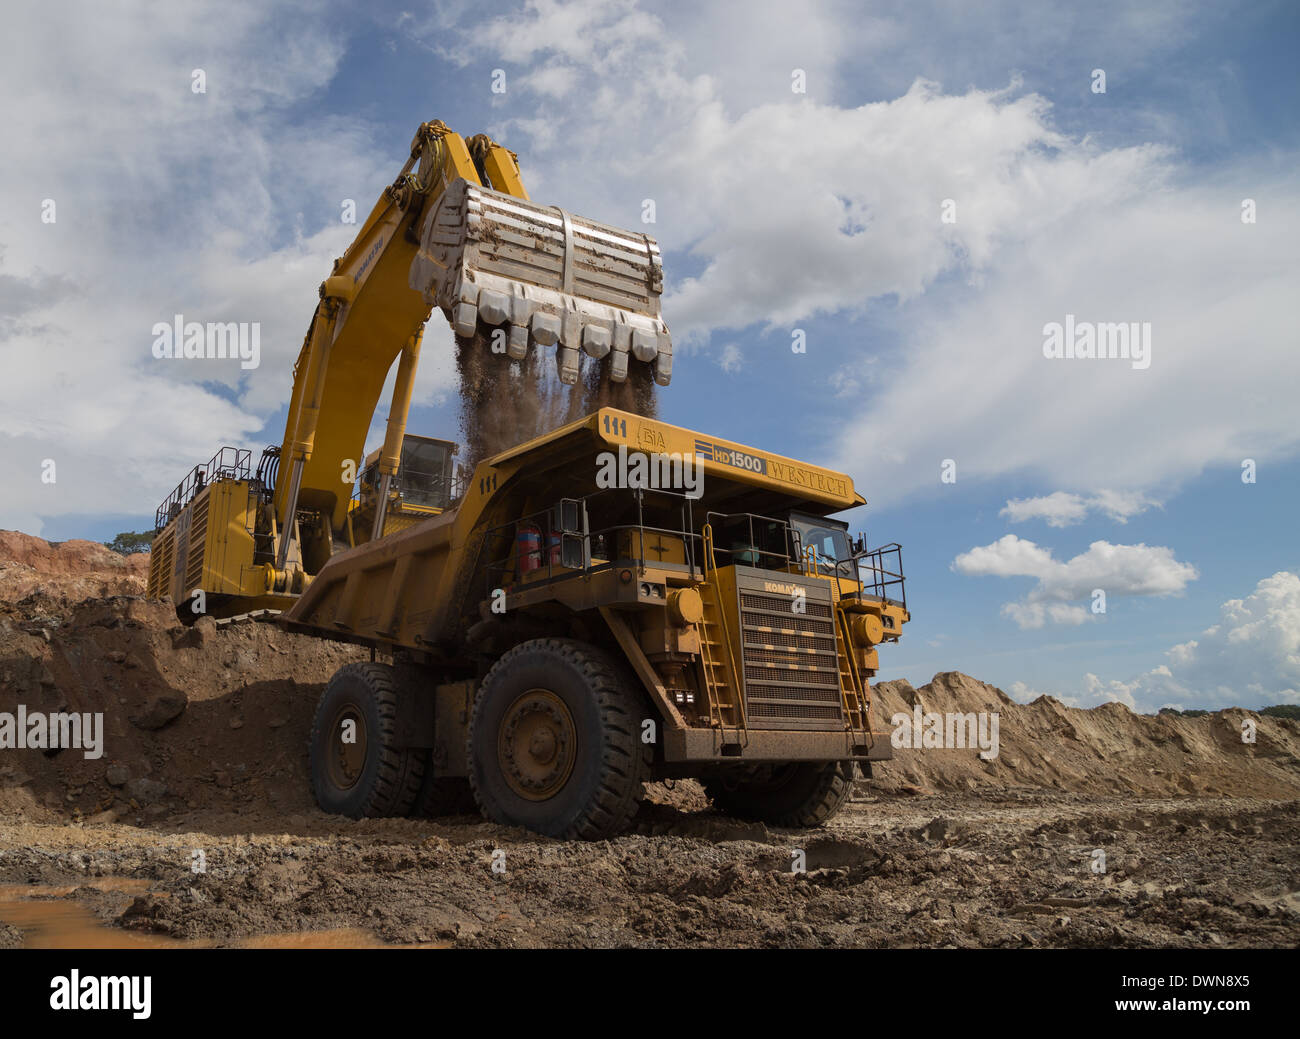 Komatsu excavator stock photography images Alamy